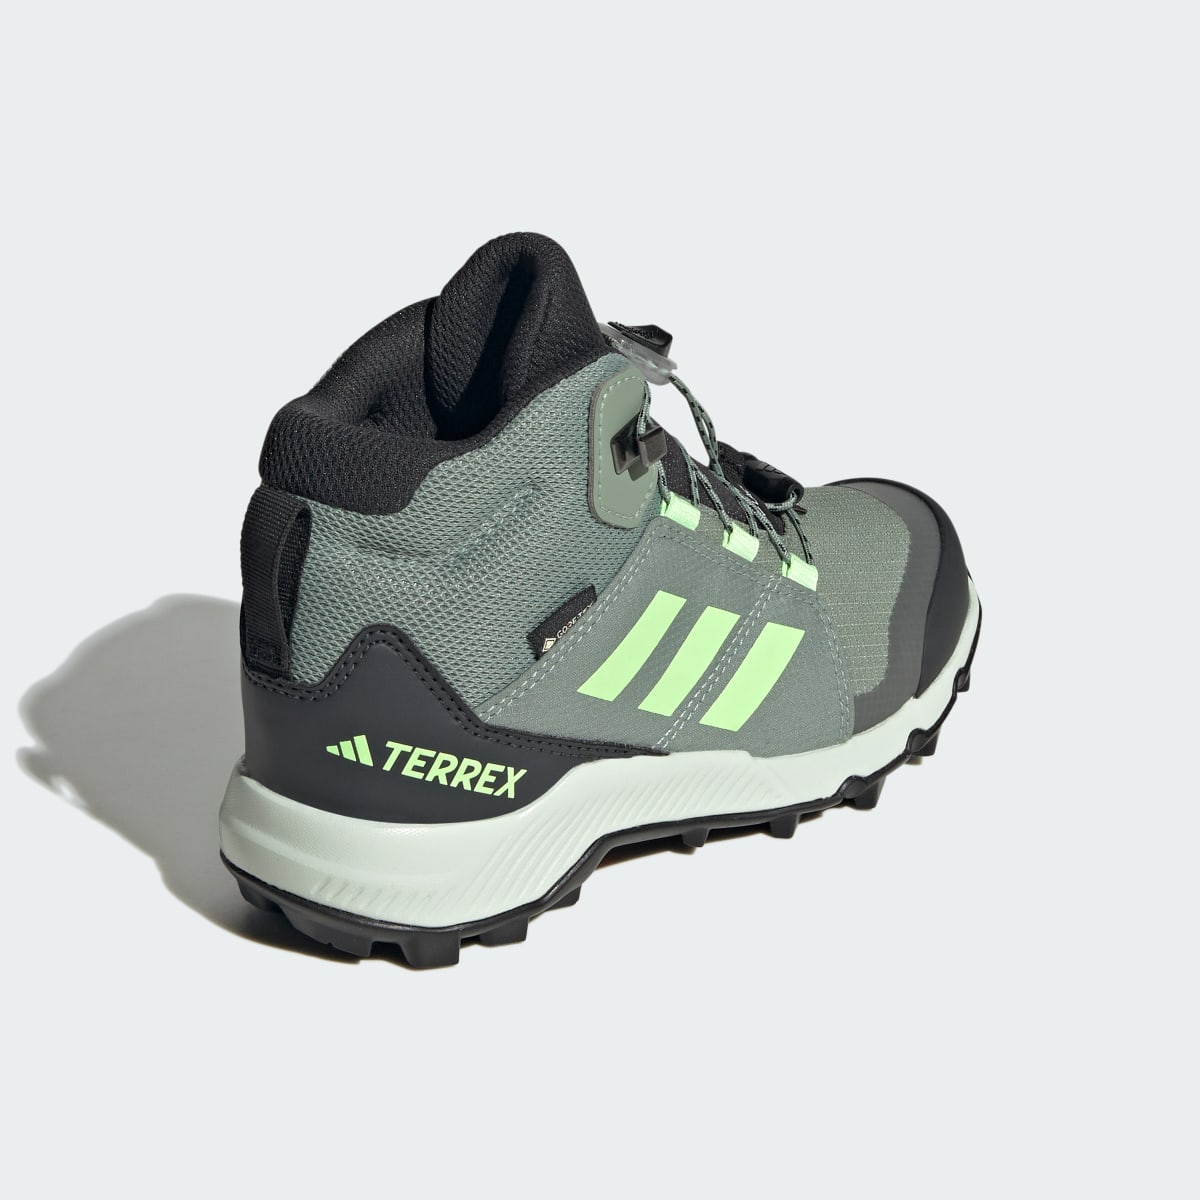 Adidas Chaussure de randonnée Organizer Mid GORE-TEX. 6